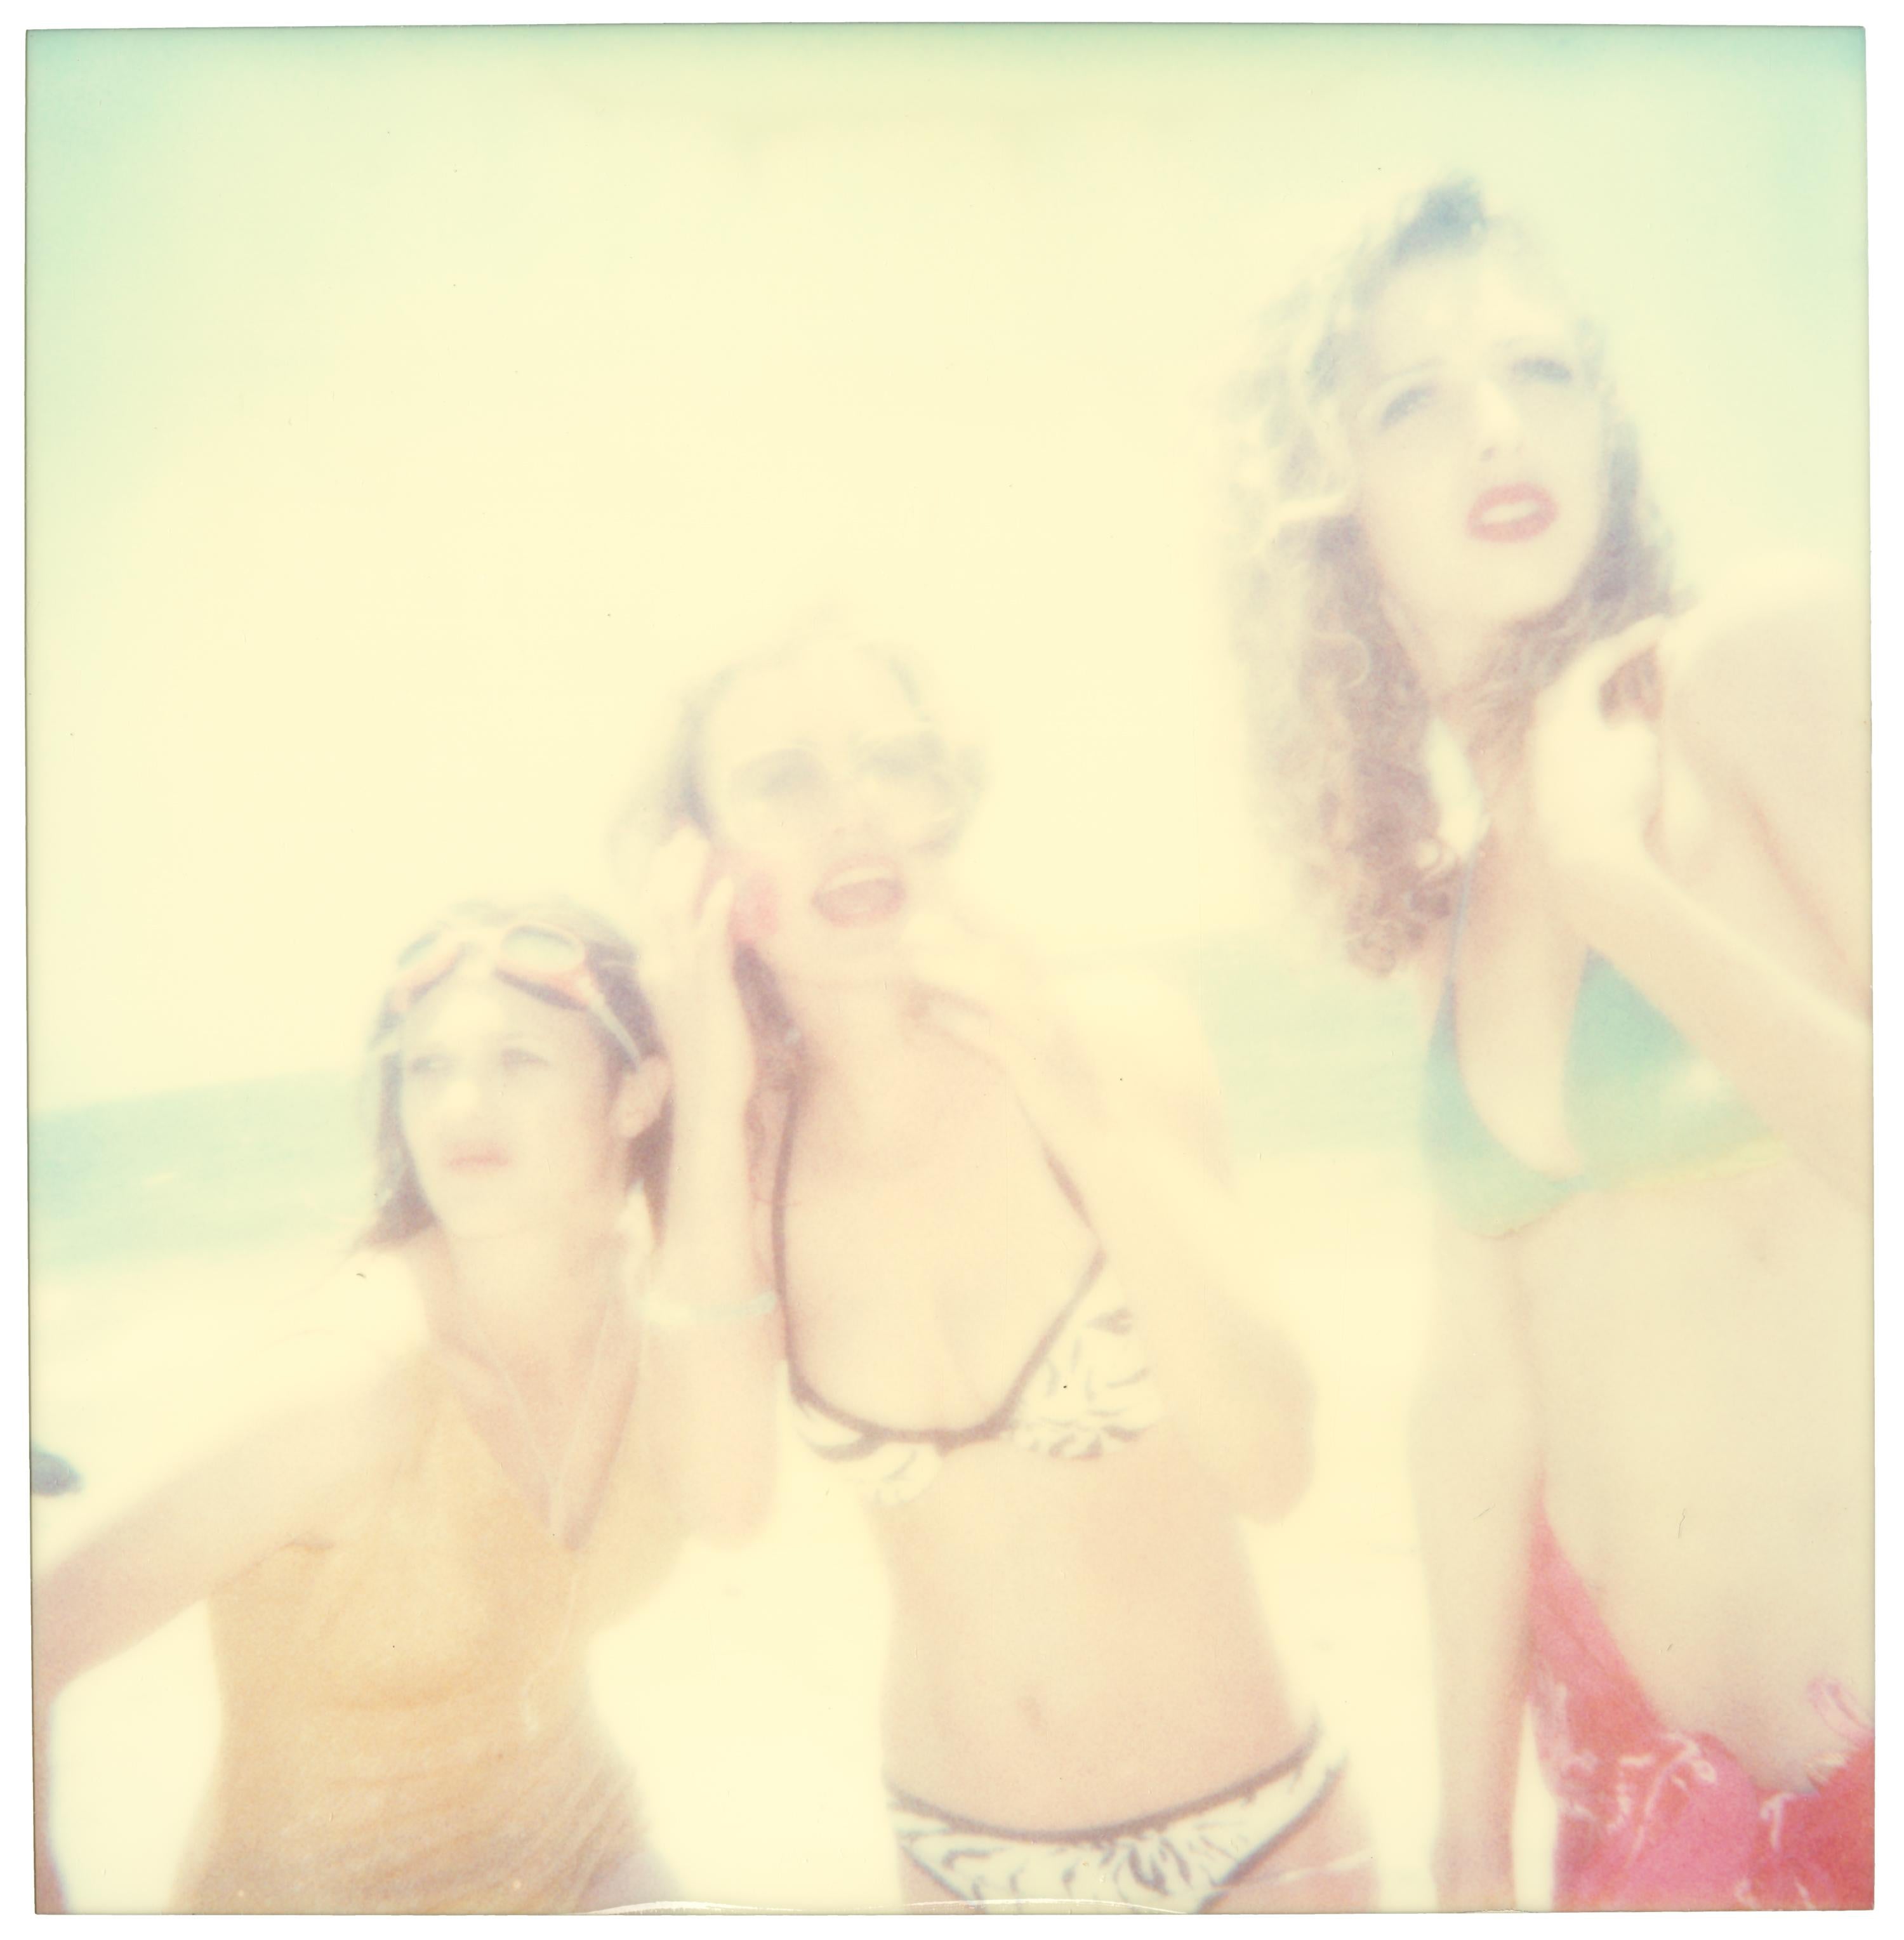 Stefanie Schneider Color Photograph - Untitled (Beachshoot) - analog, Polaroid, hand-print, vintage